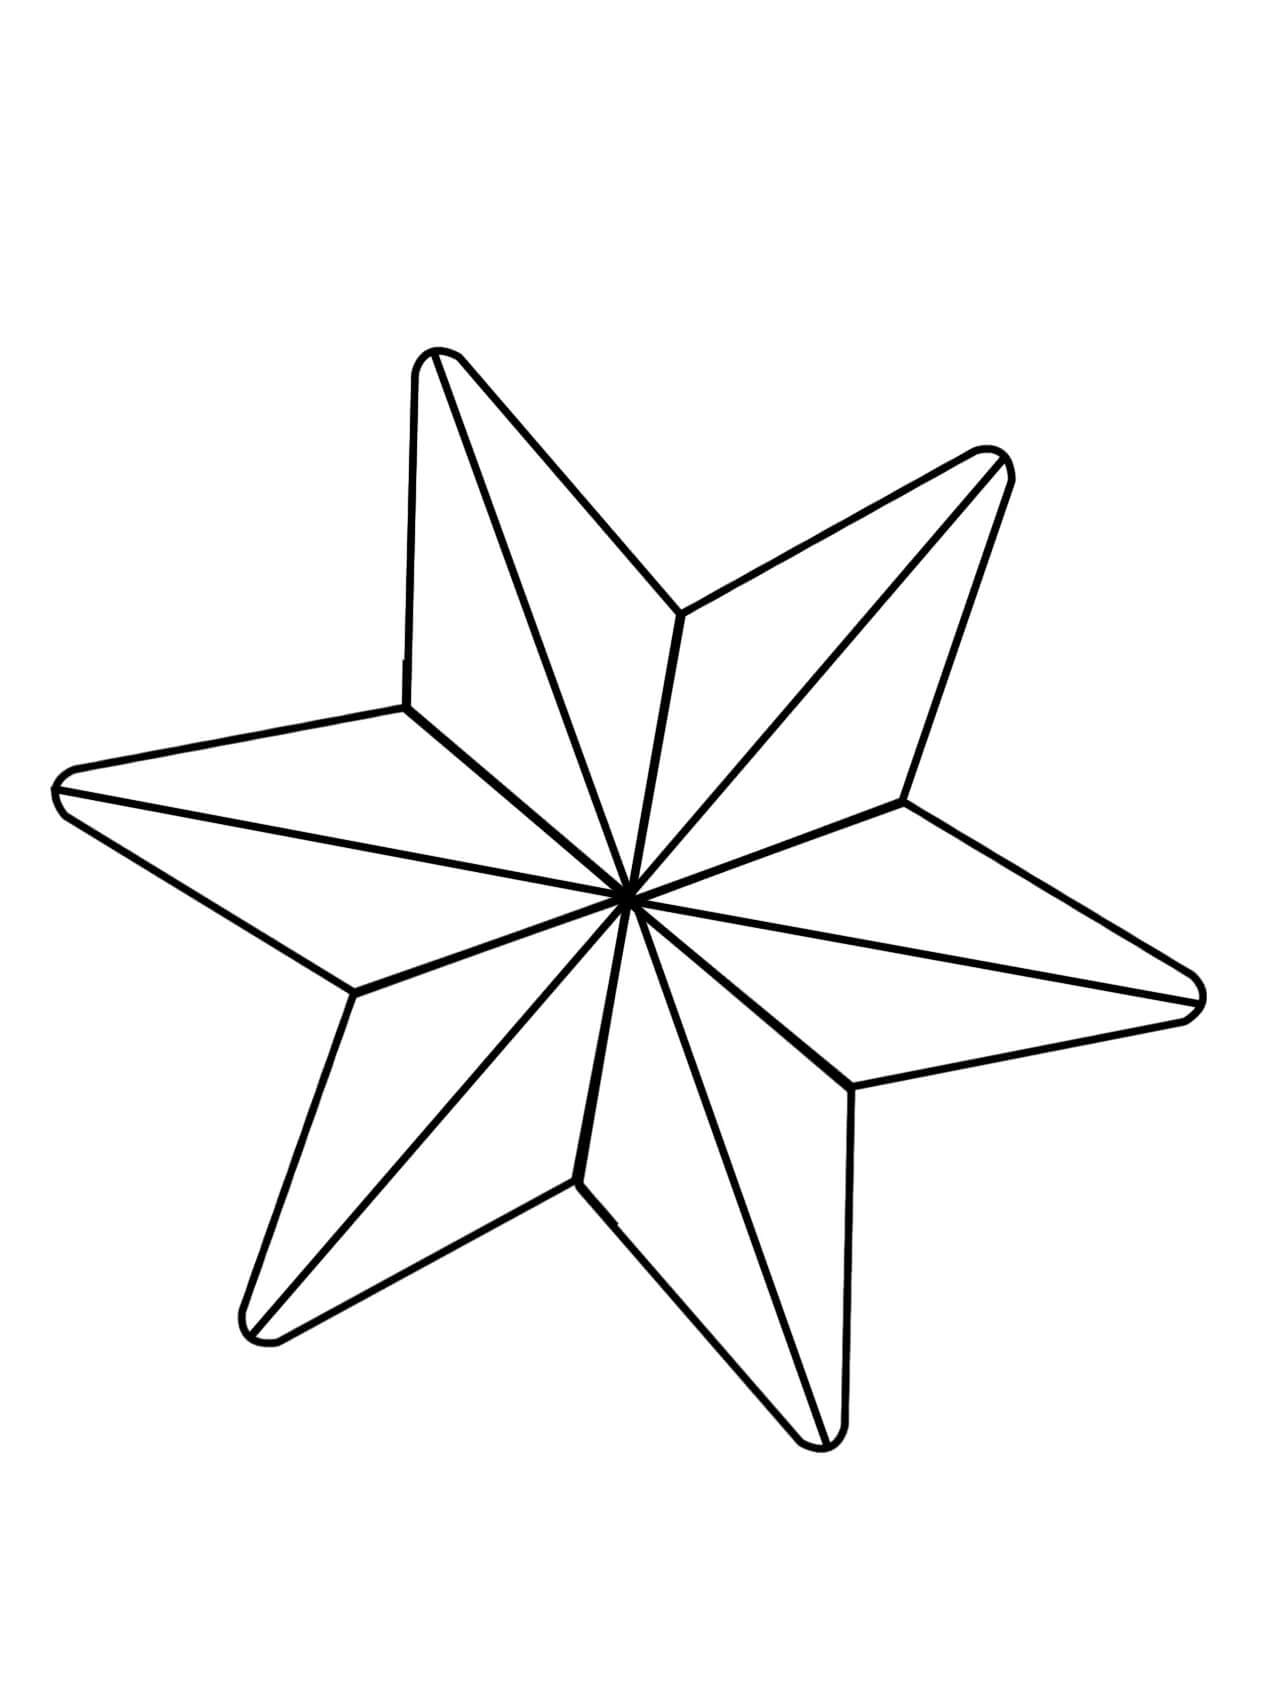 Dibujo Estrella para colorear, imprimir e dibujar